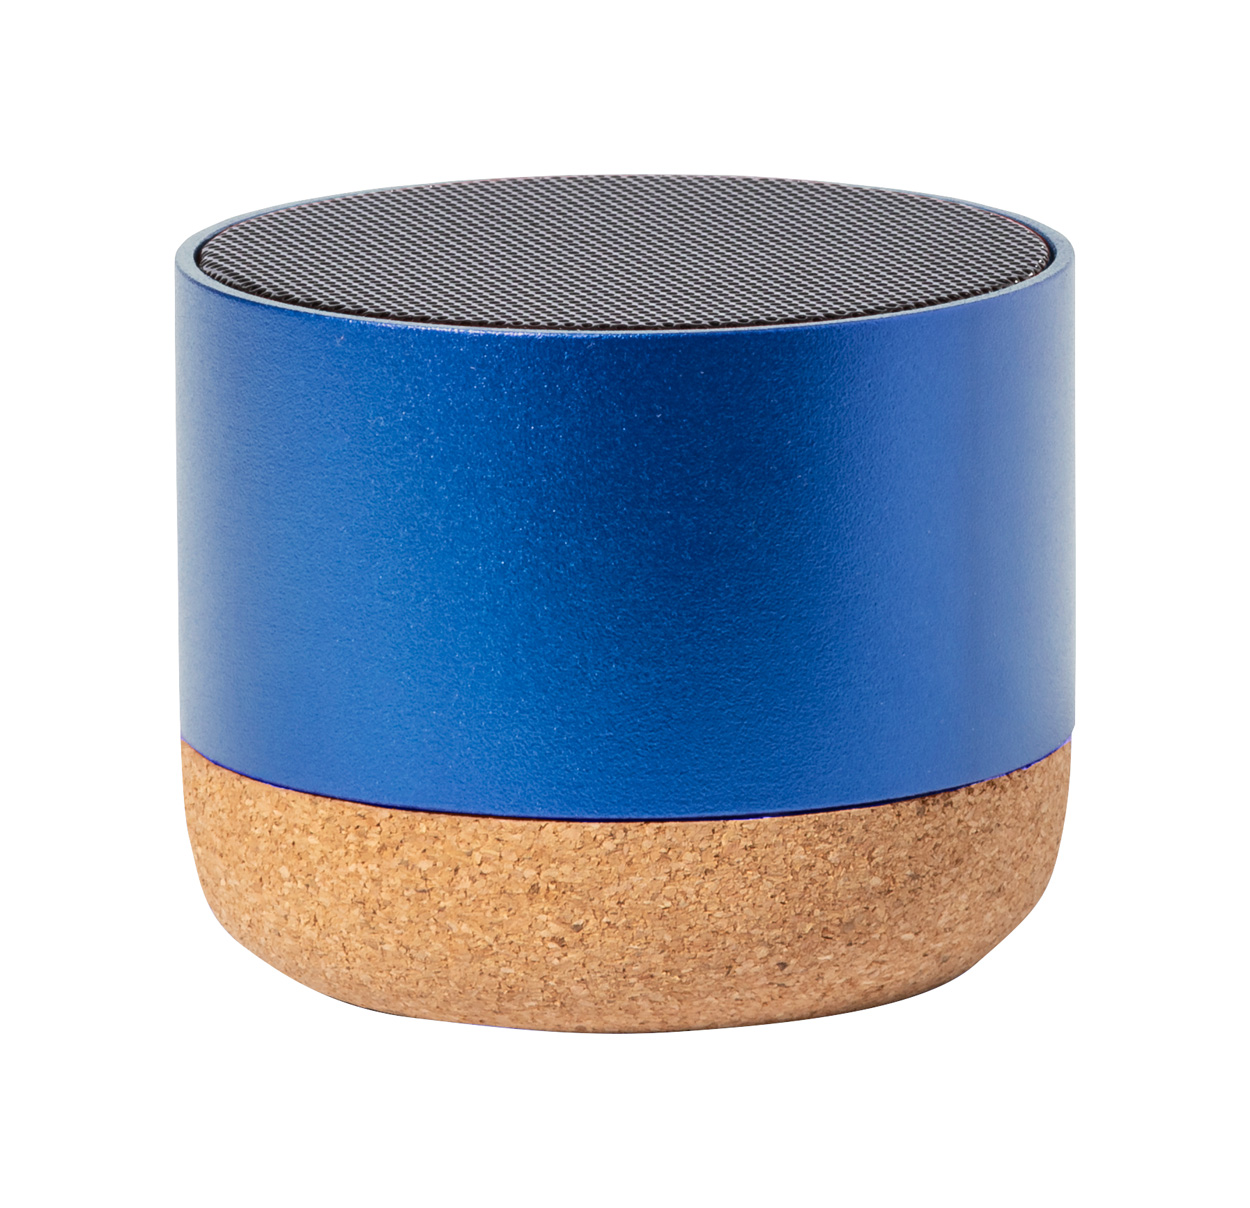 Moore bluetooth speaker - blue